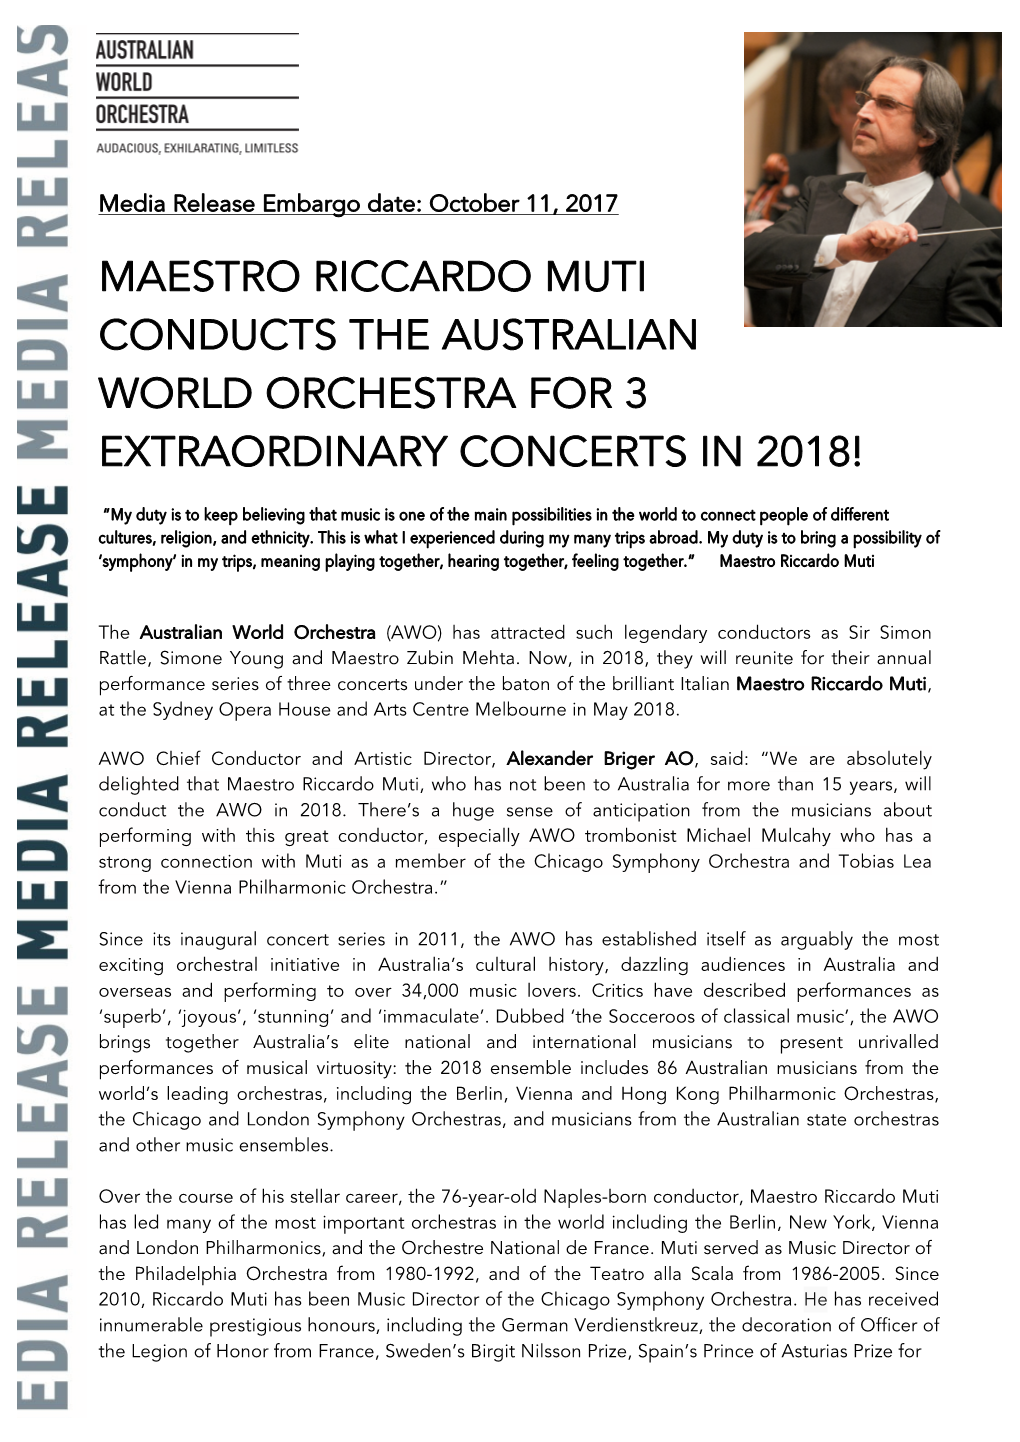 Maestro Riccardo Muti Conducts the Australian World Orchestra for 3 Extraordinary Concerts in 2018!